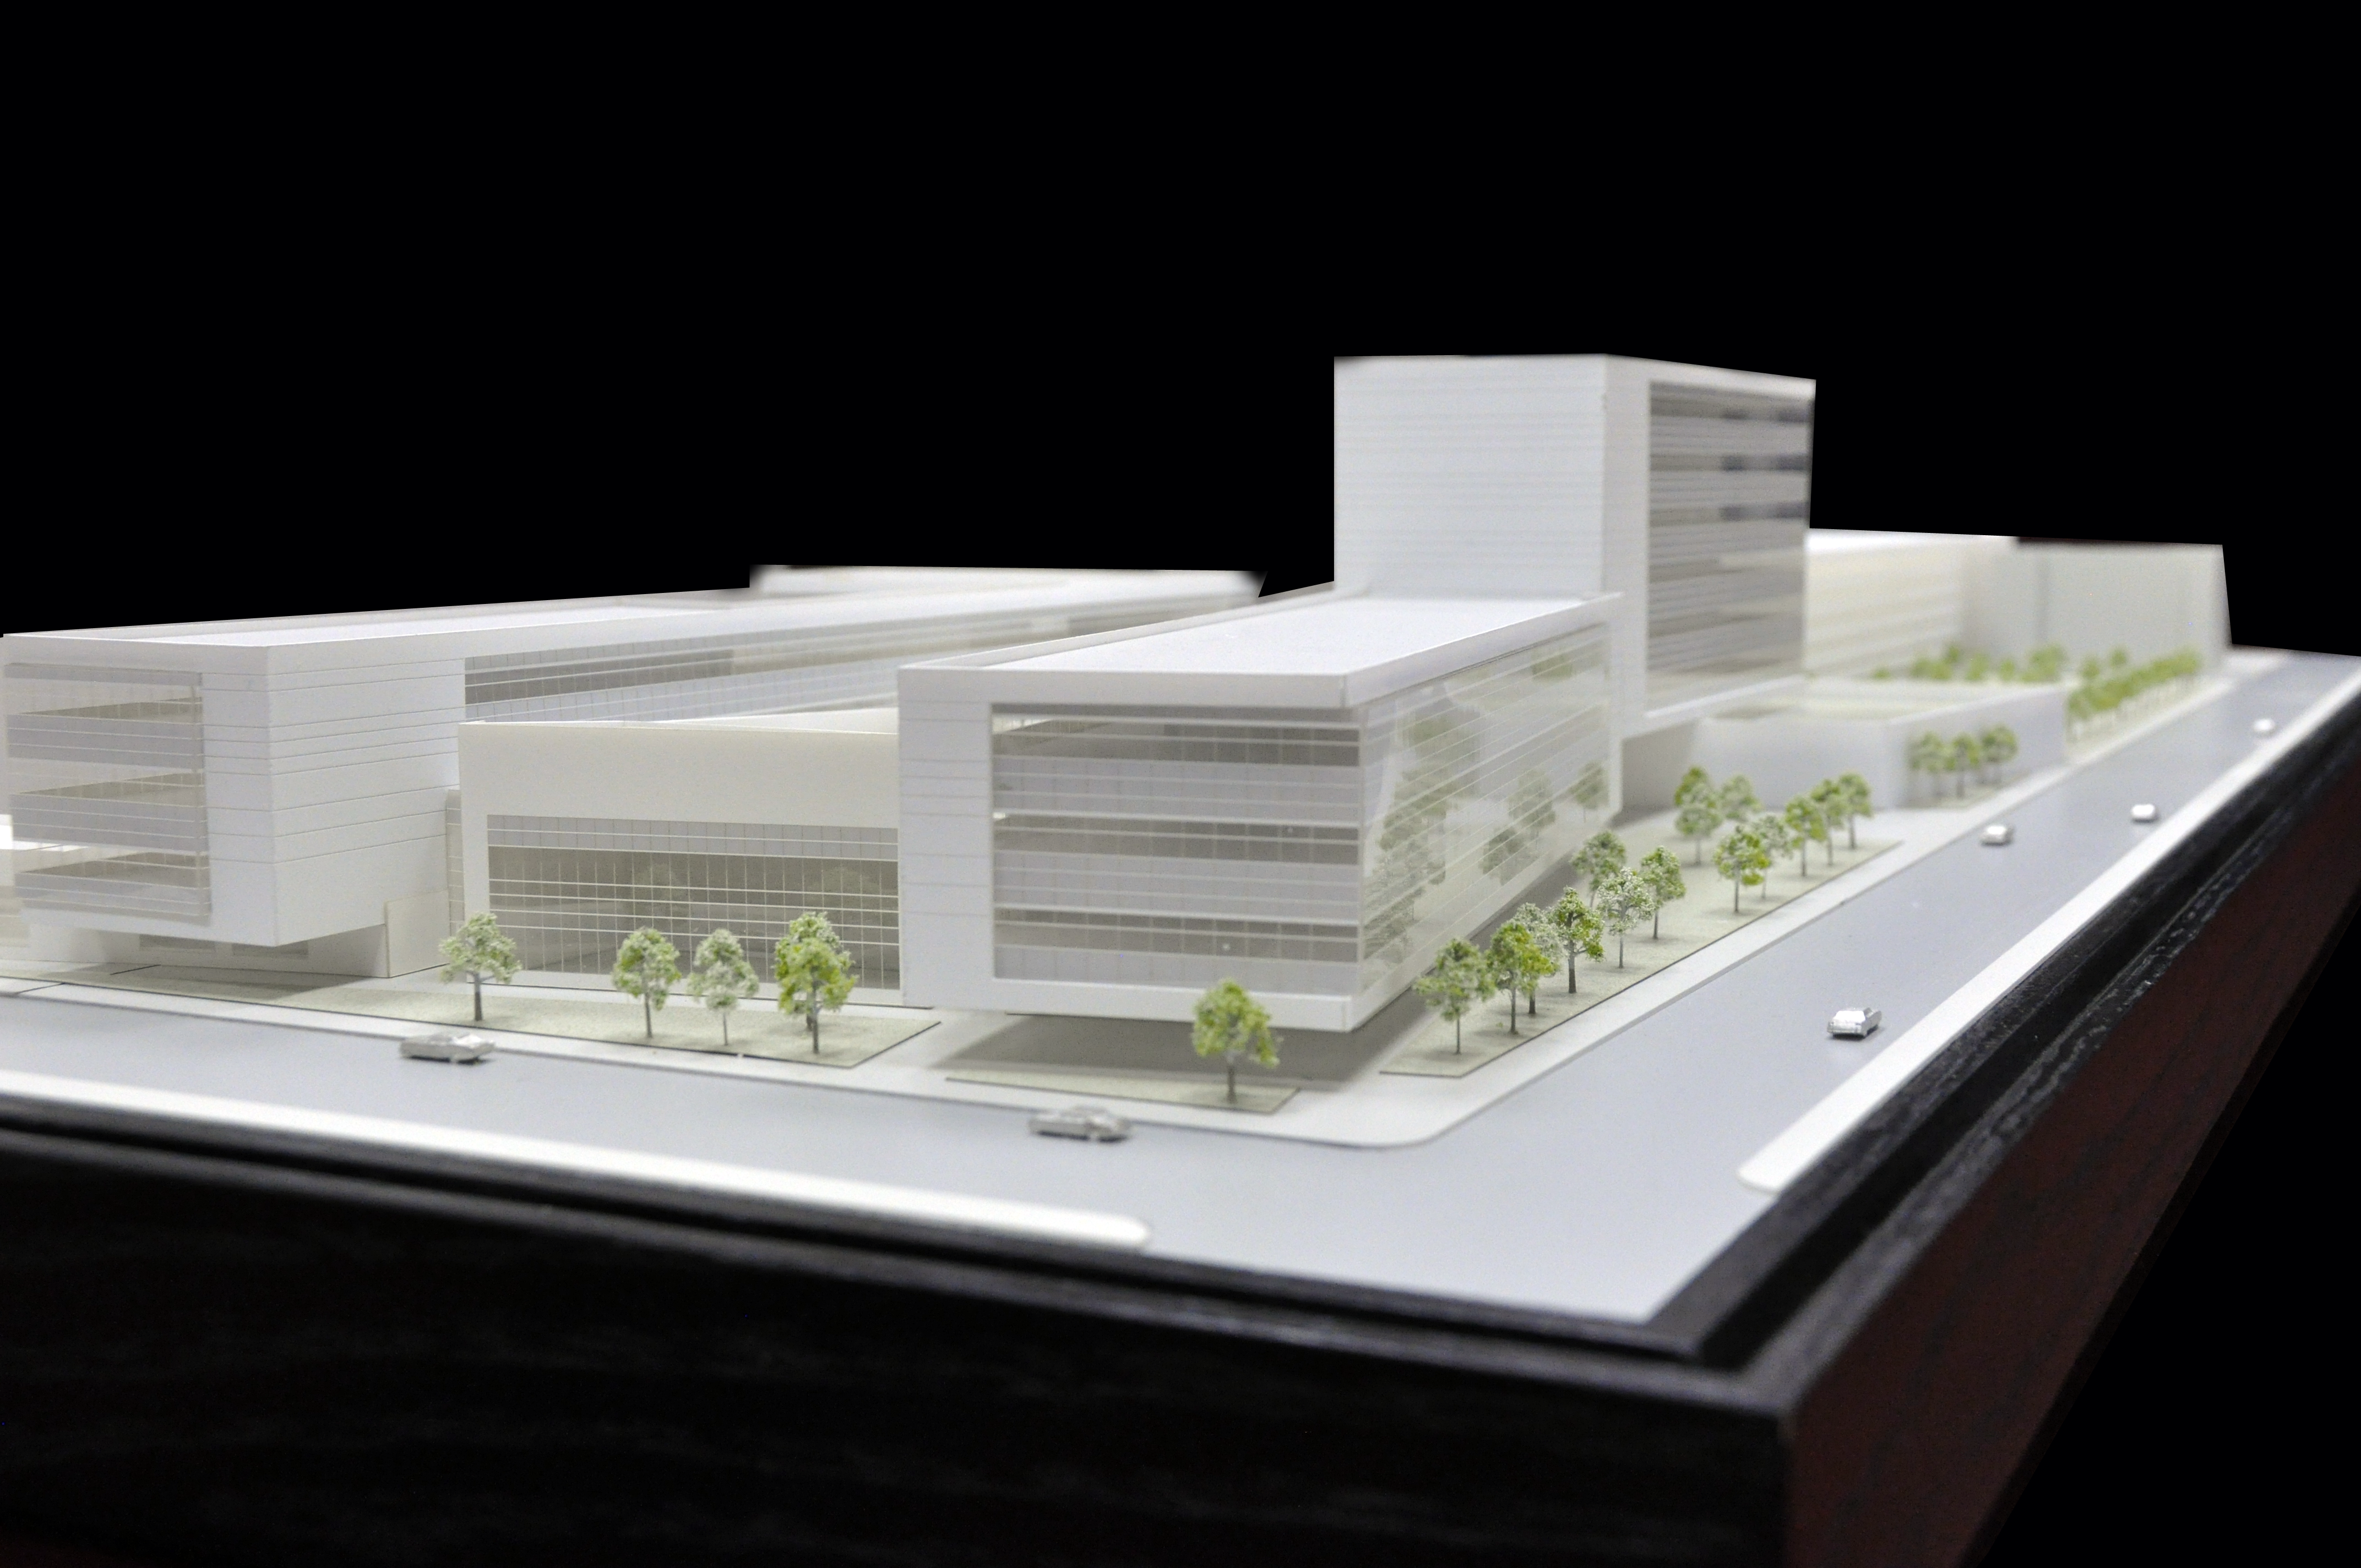 Scale Model of New Malcolm X College facility